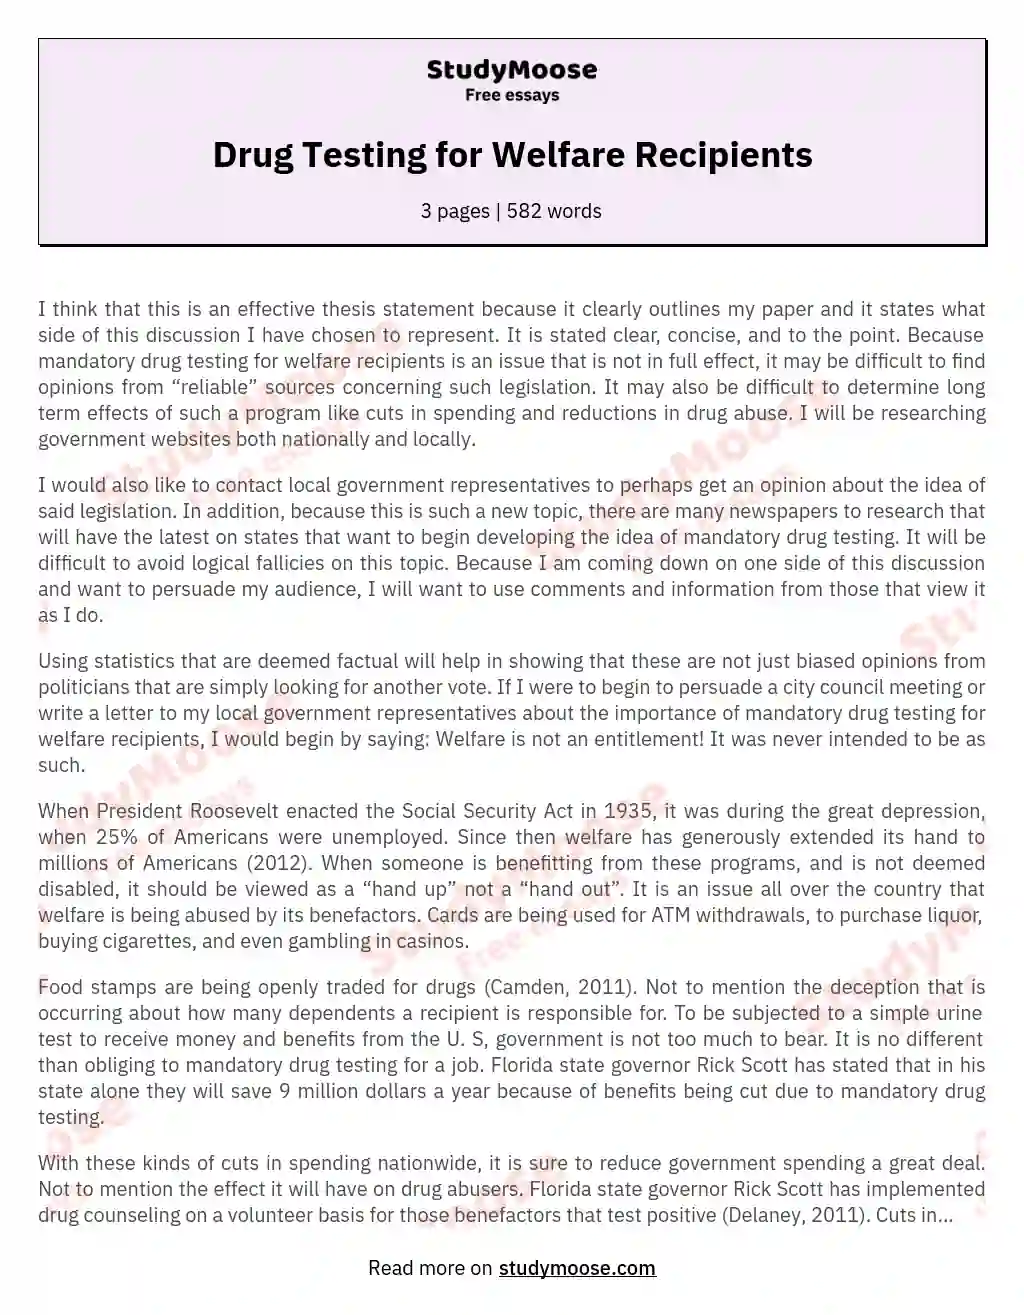 Drug Testing for Welfare Recipients essay